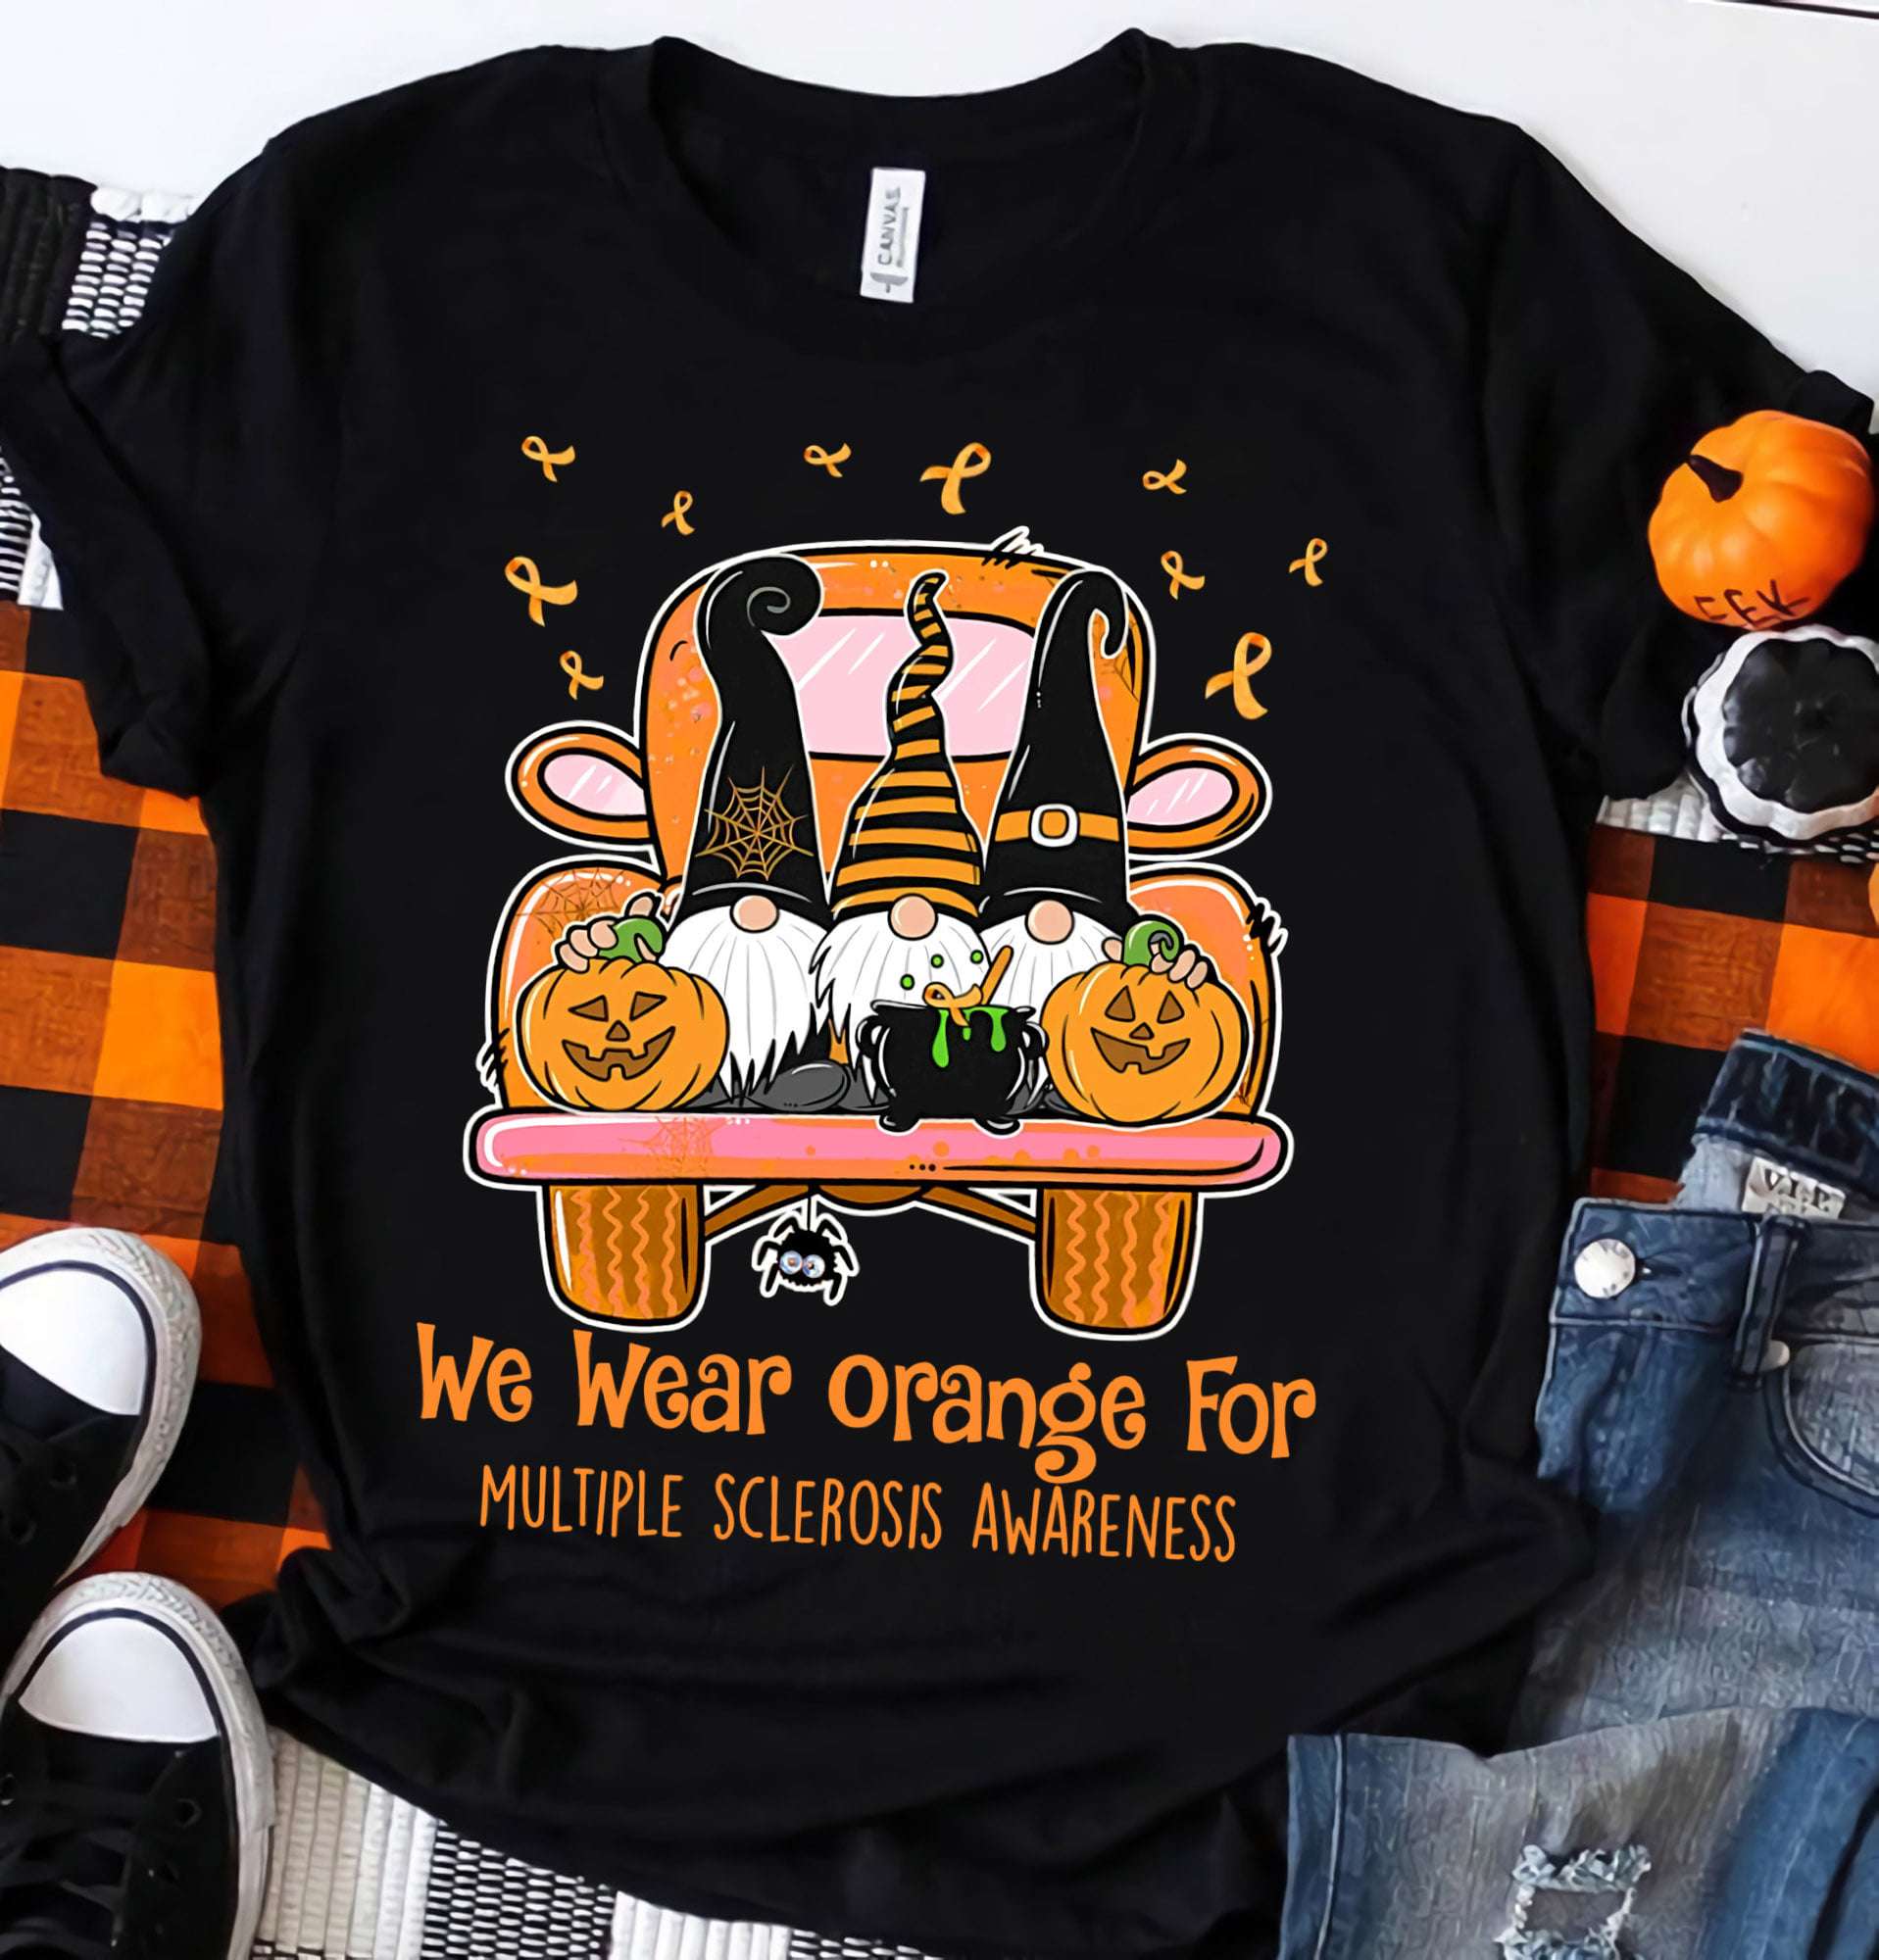 Multiple Sclerosis Gnomes, Halloween Costume - We wear orange for Multiple Sclerosis awareness